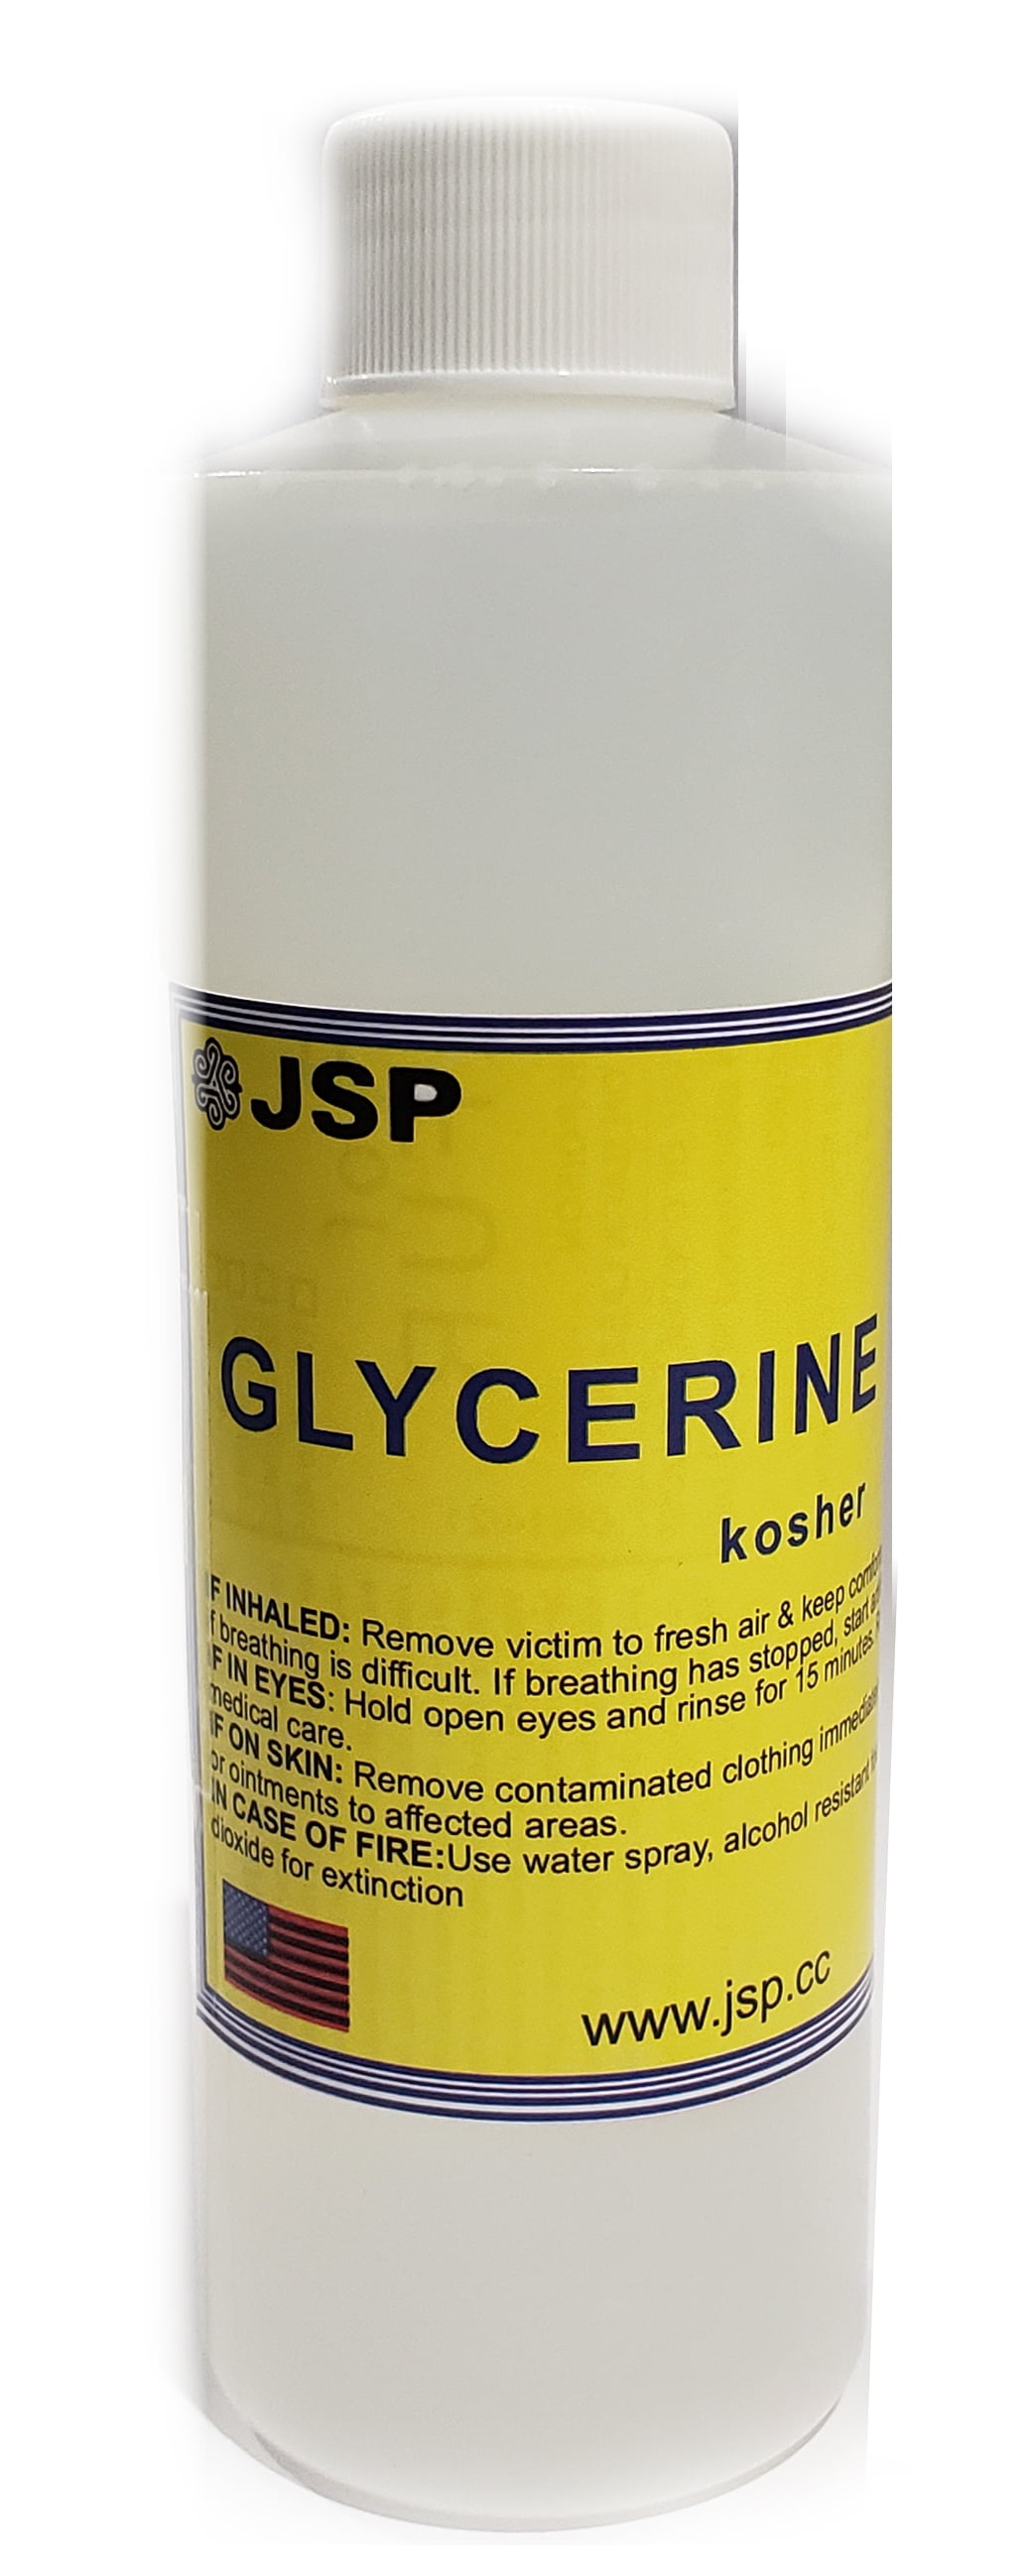 Glycerine LS Adulte 1,8 G